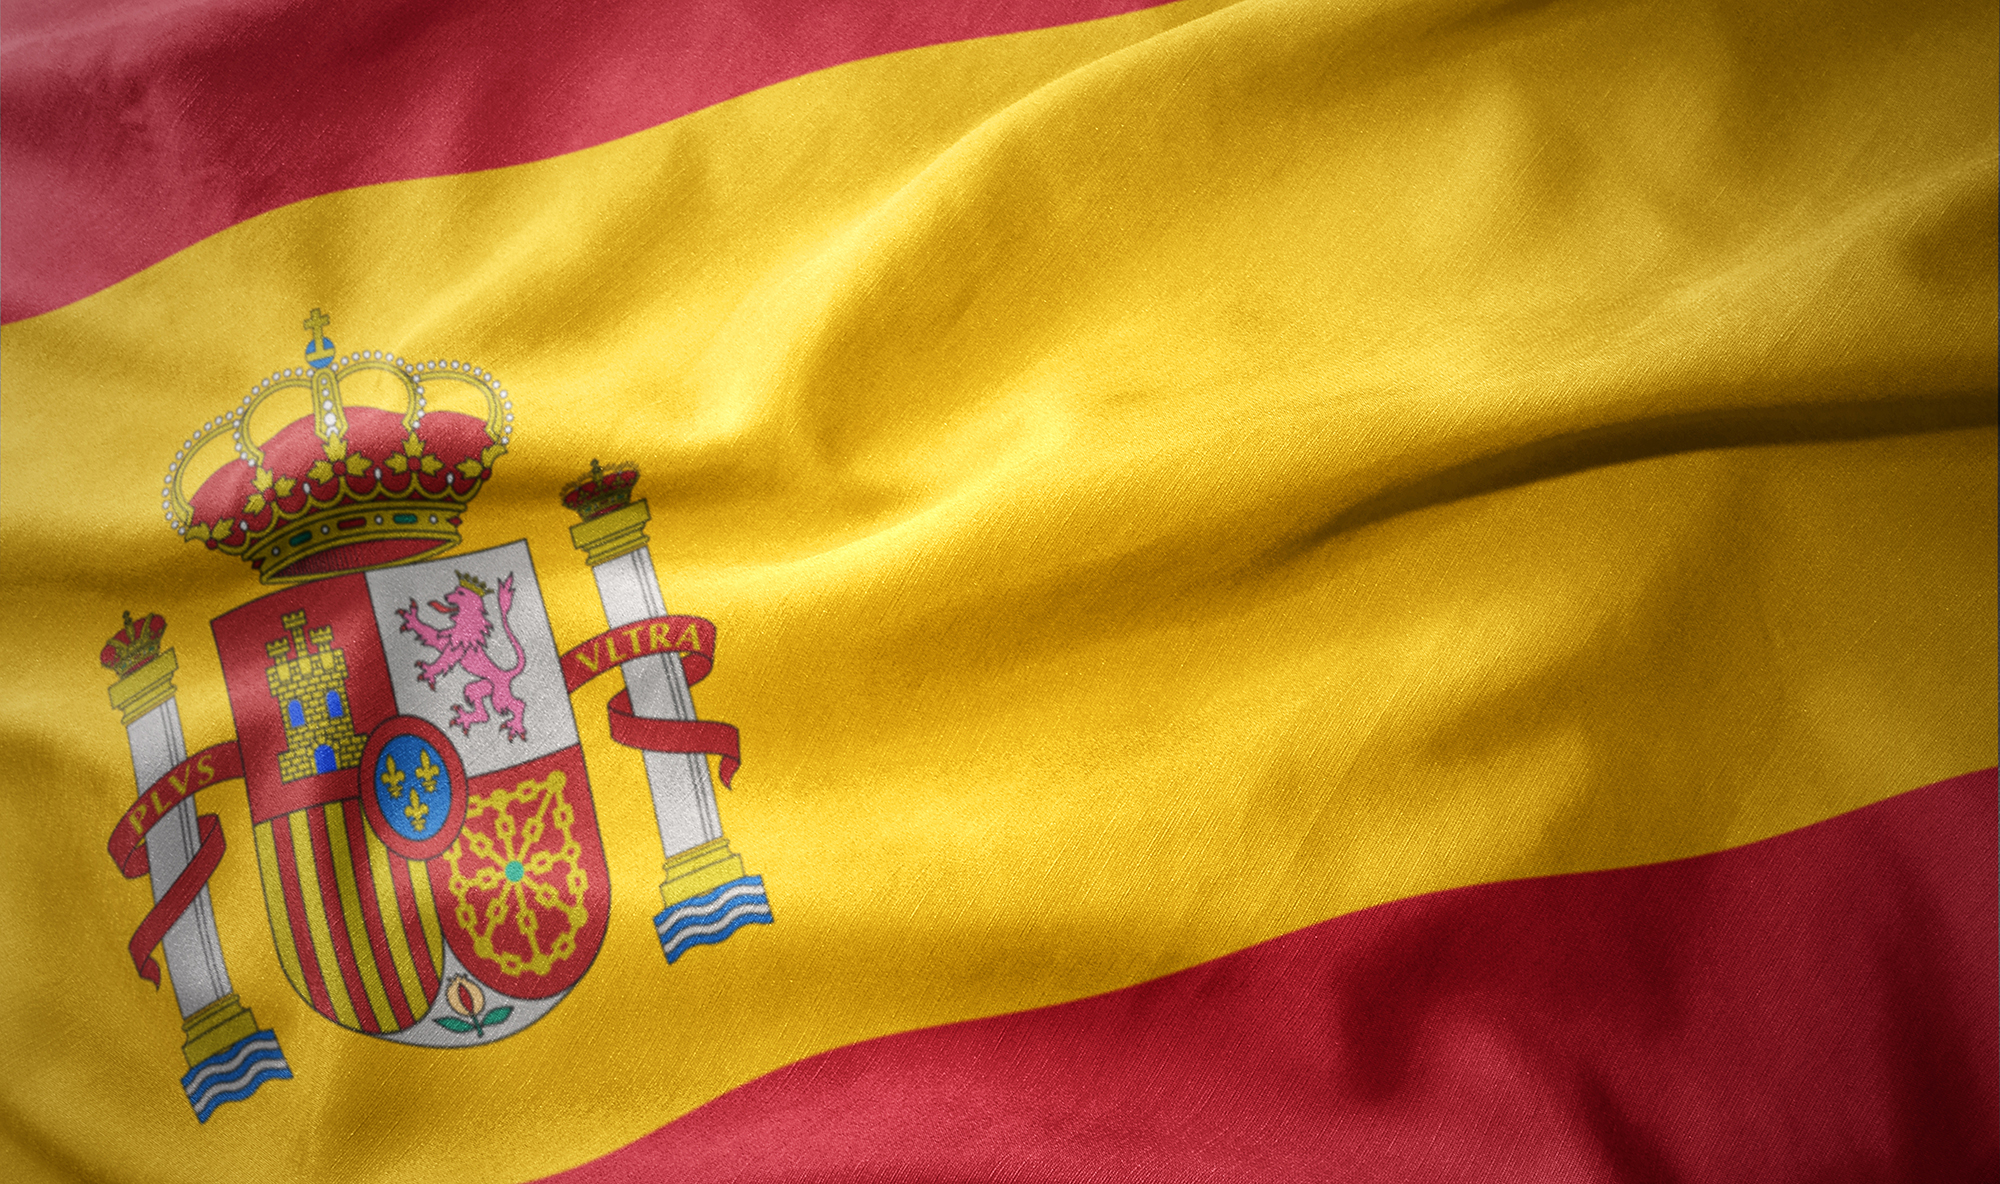 ðŸ‡ªðŸ‡¸ Top 3 country-specific DAC6 considerations in Spain